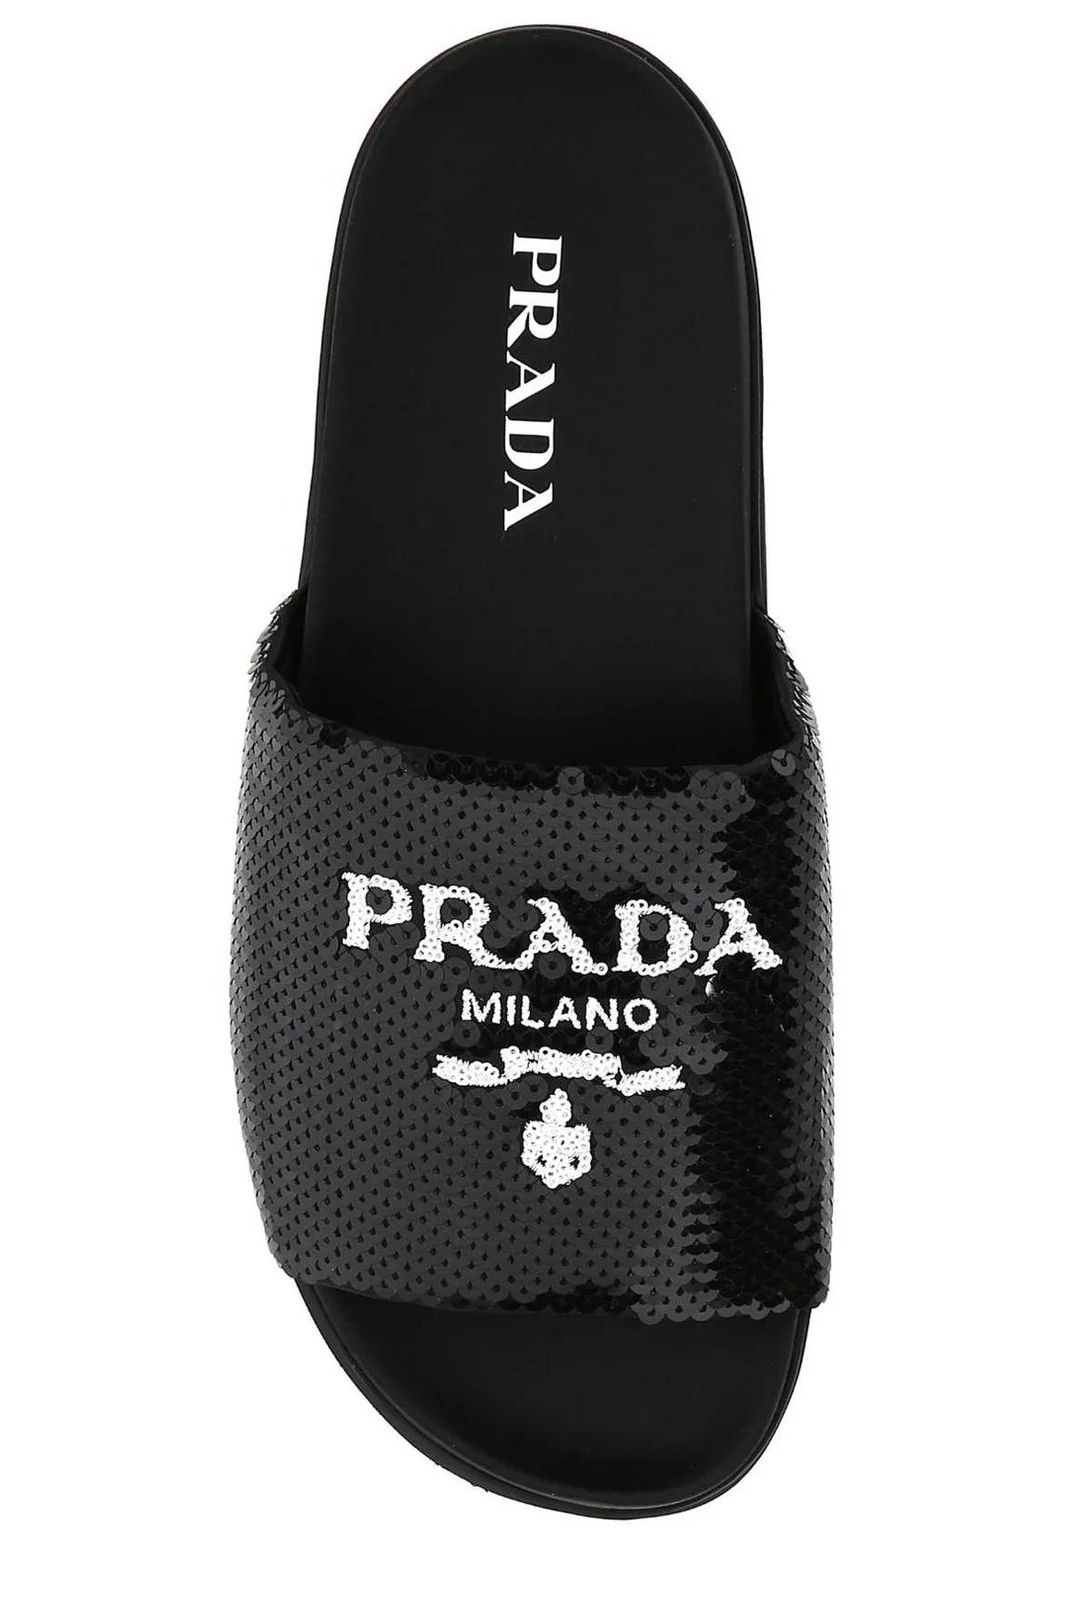 Prada Logo Detailed Sequin Slides | Cettire Global